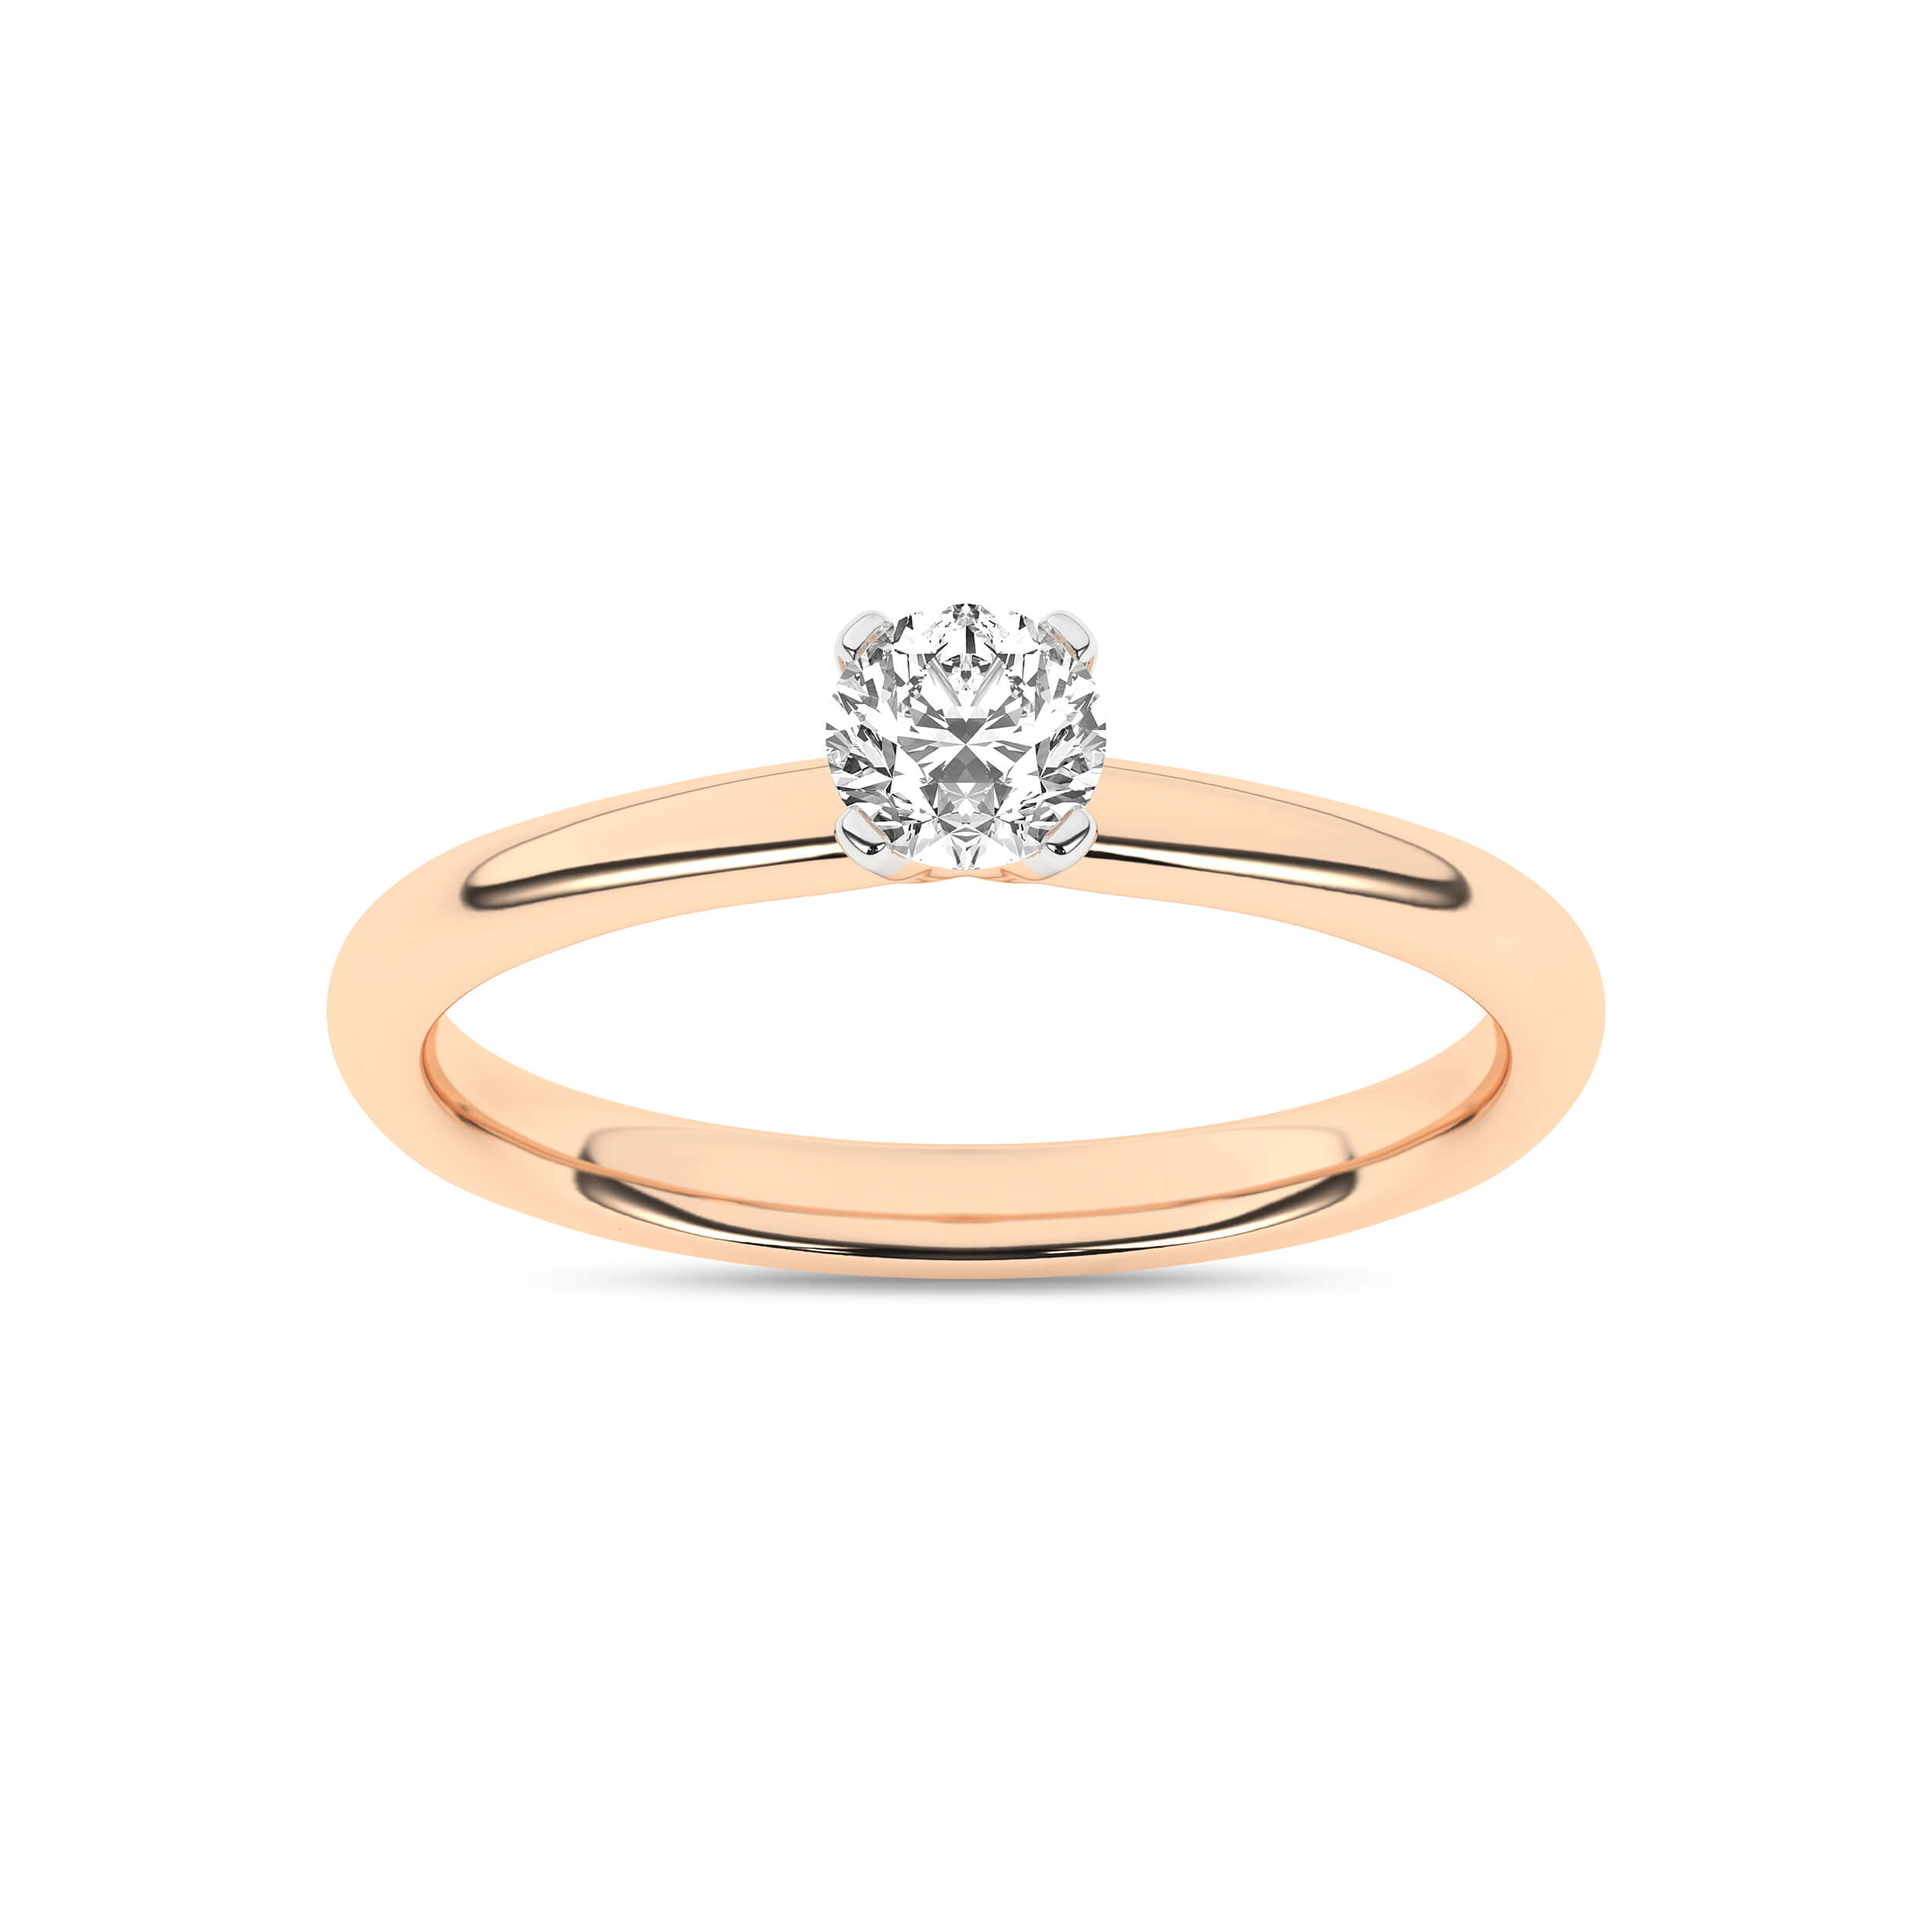 Inel de logodna din Aur Roz 14K cu Diamant 0.33Ct, articol RS0910, previzualizare foto 2